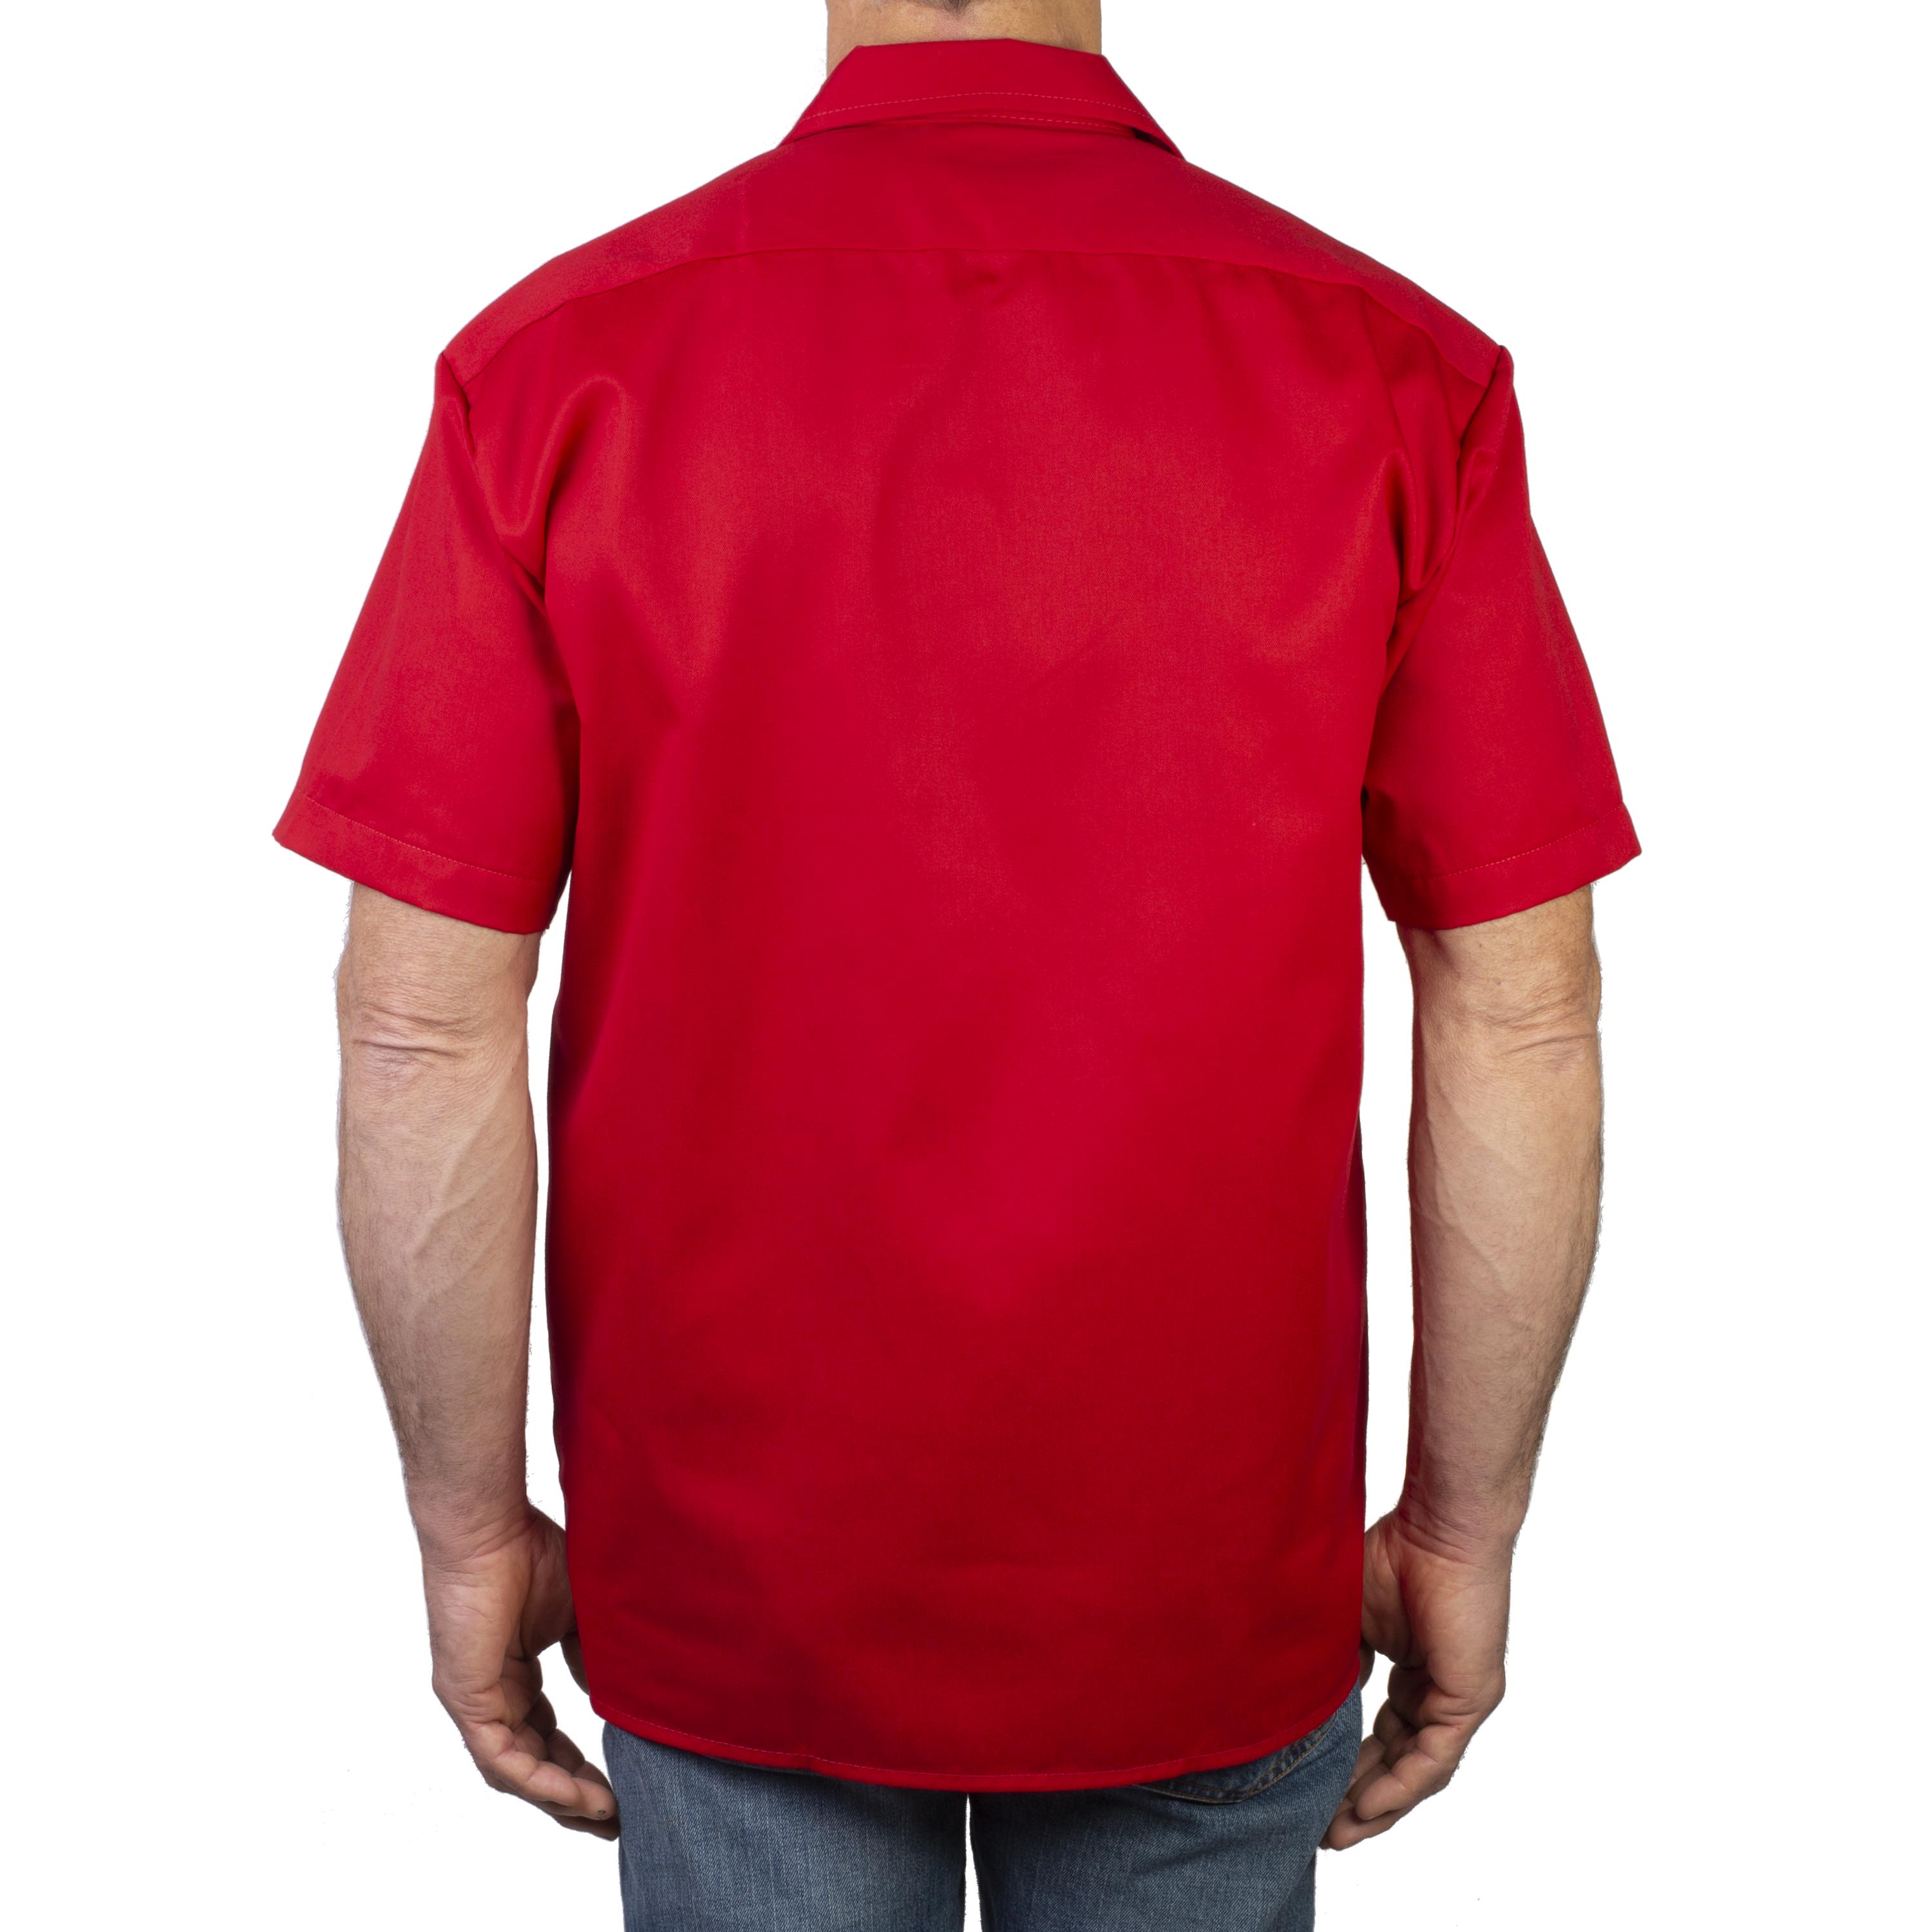 StewMac Dickies Work Shirt, Red